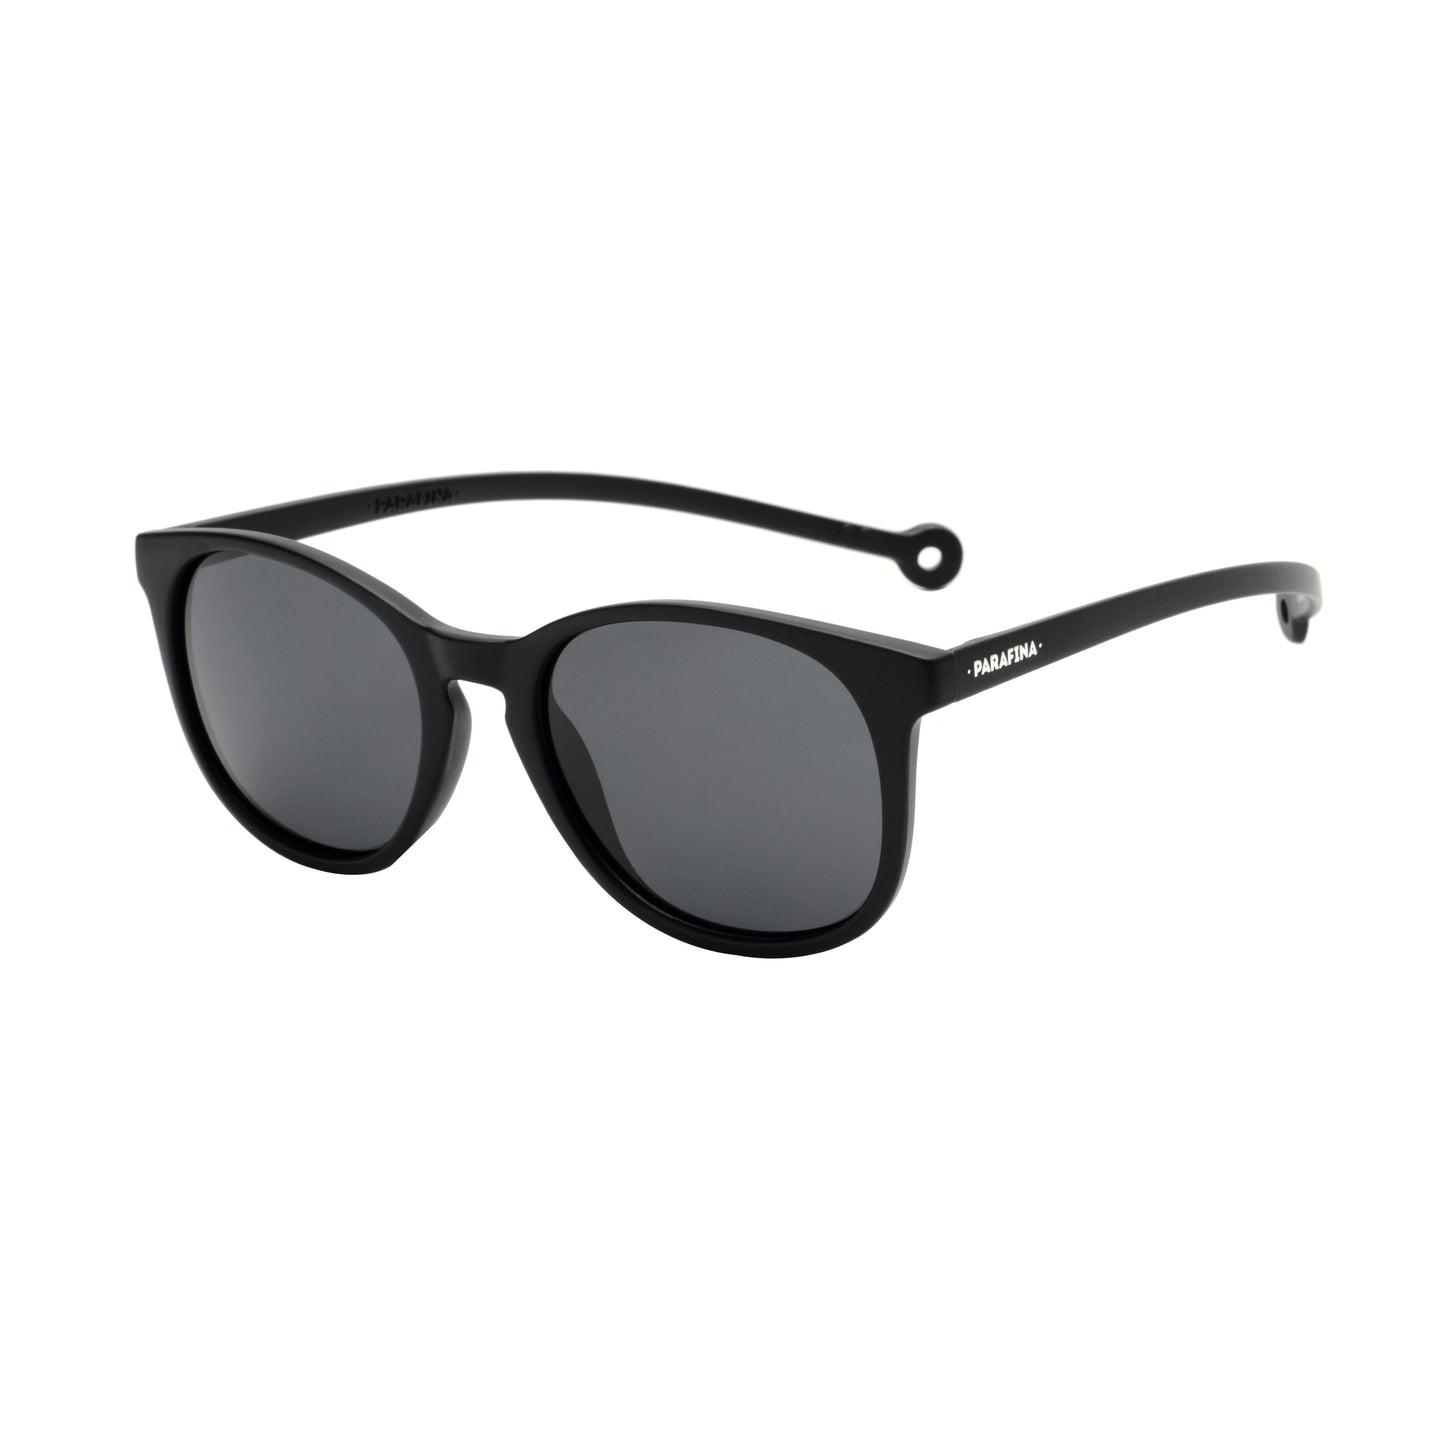 ARROYO Sunglasses - Black Matt